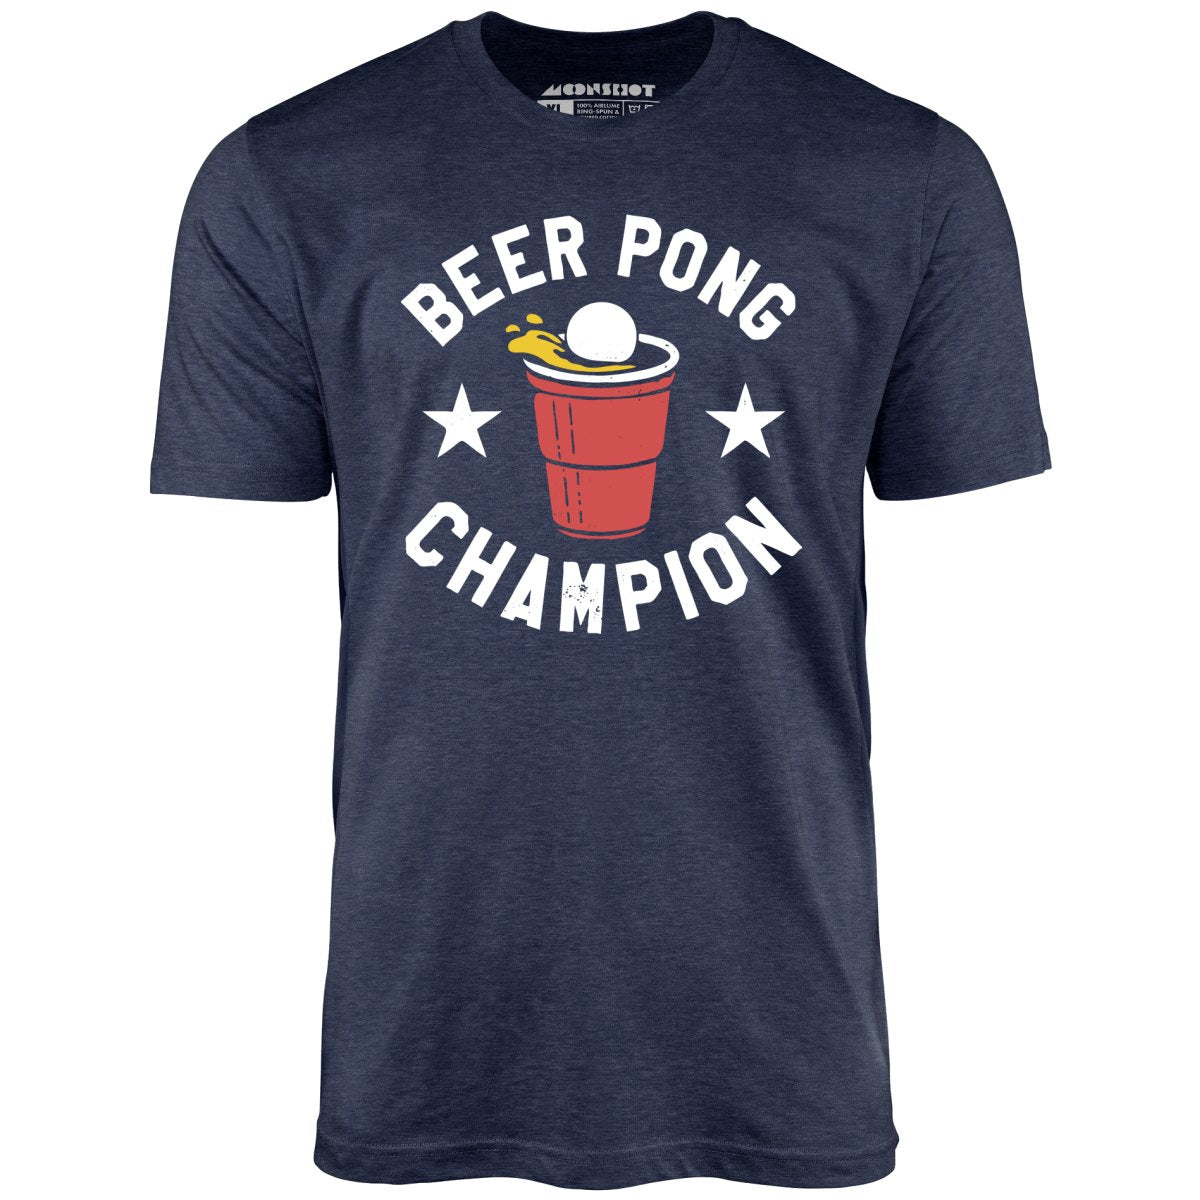 Beer Pong Champion - Unisex T-Shirt